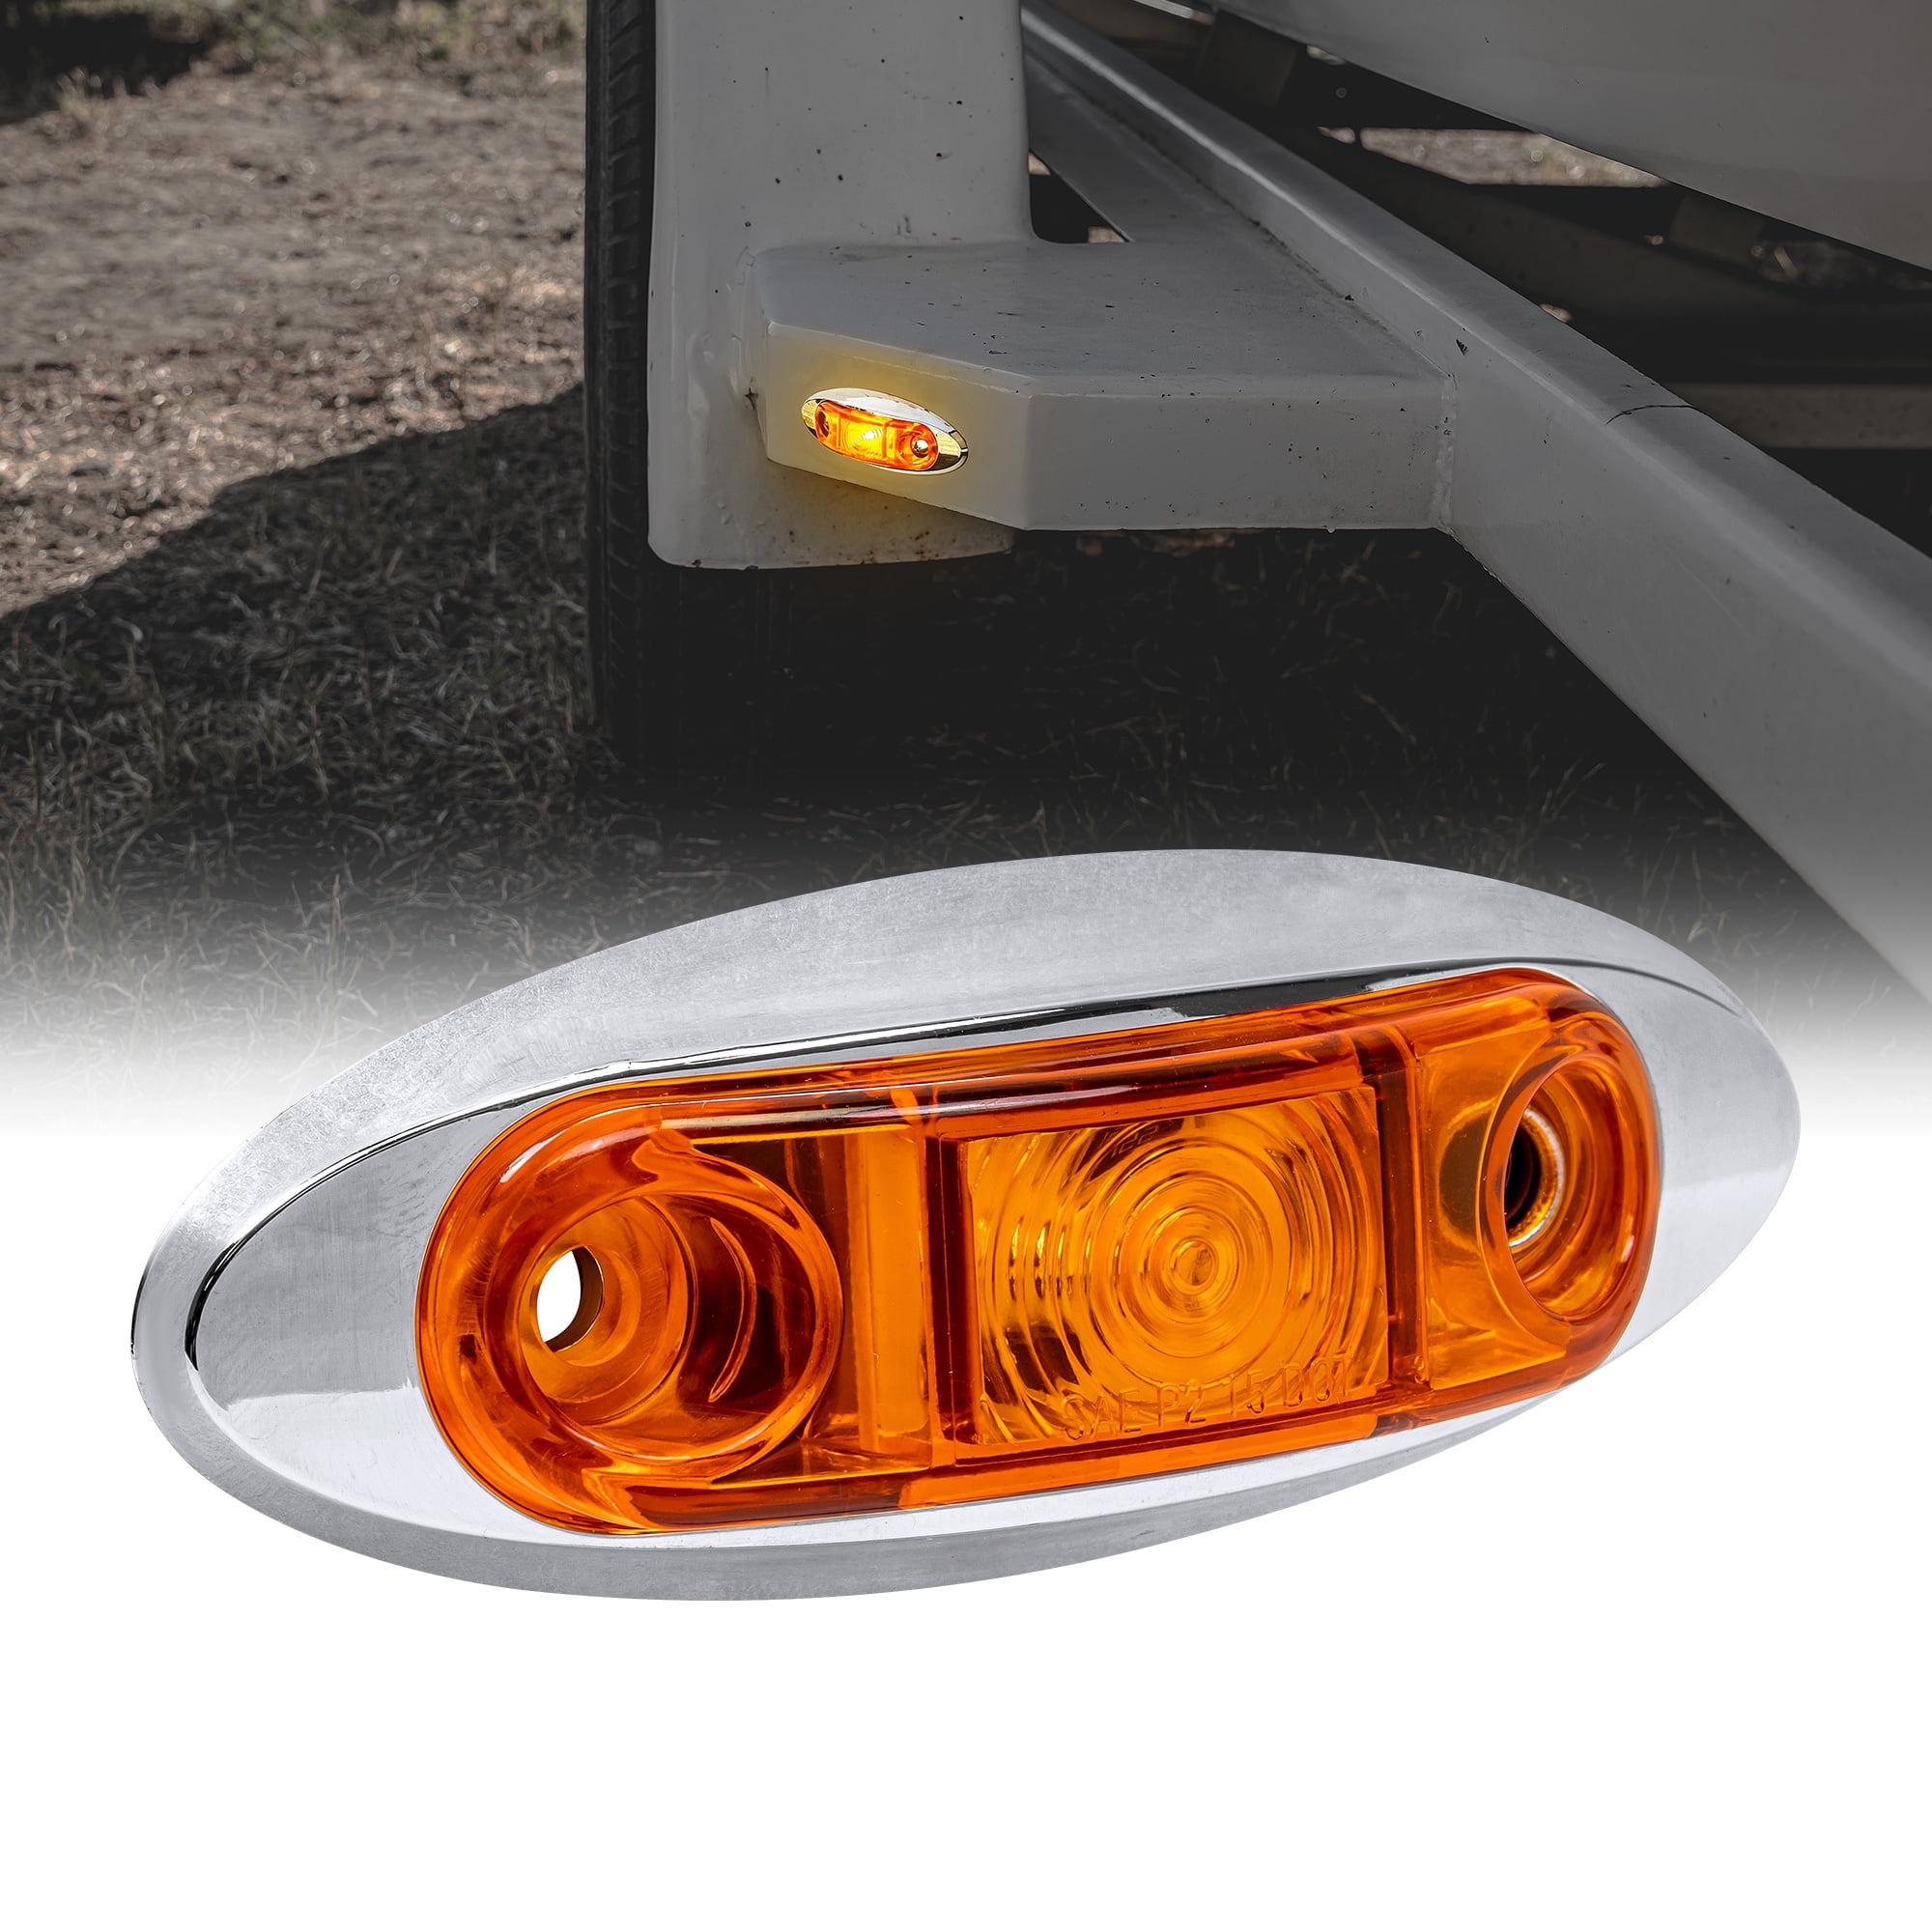 Details about  / 2pcs 24 LED White Truck Trailer Side Marker Clearance Light With Chrome Base 12V